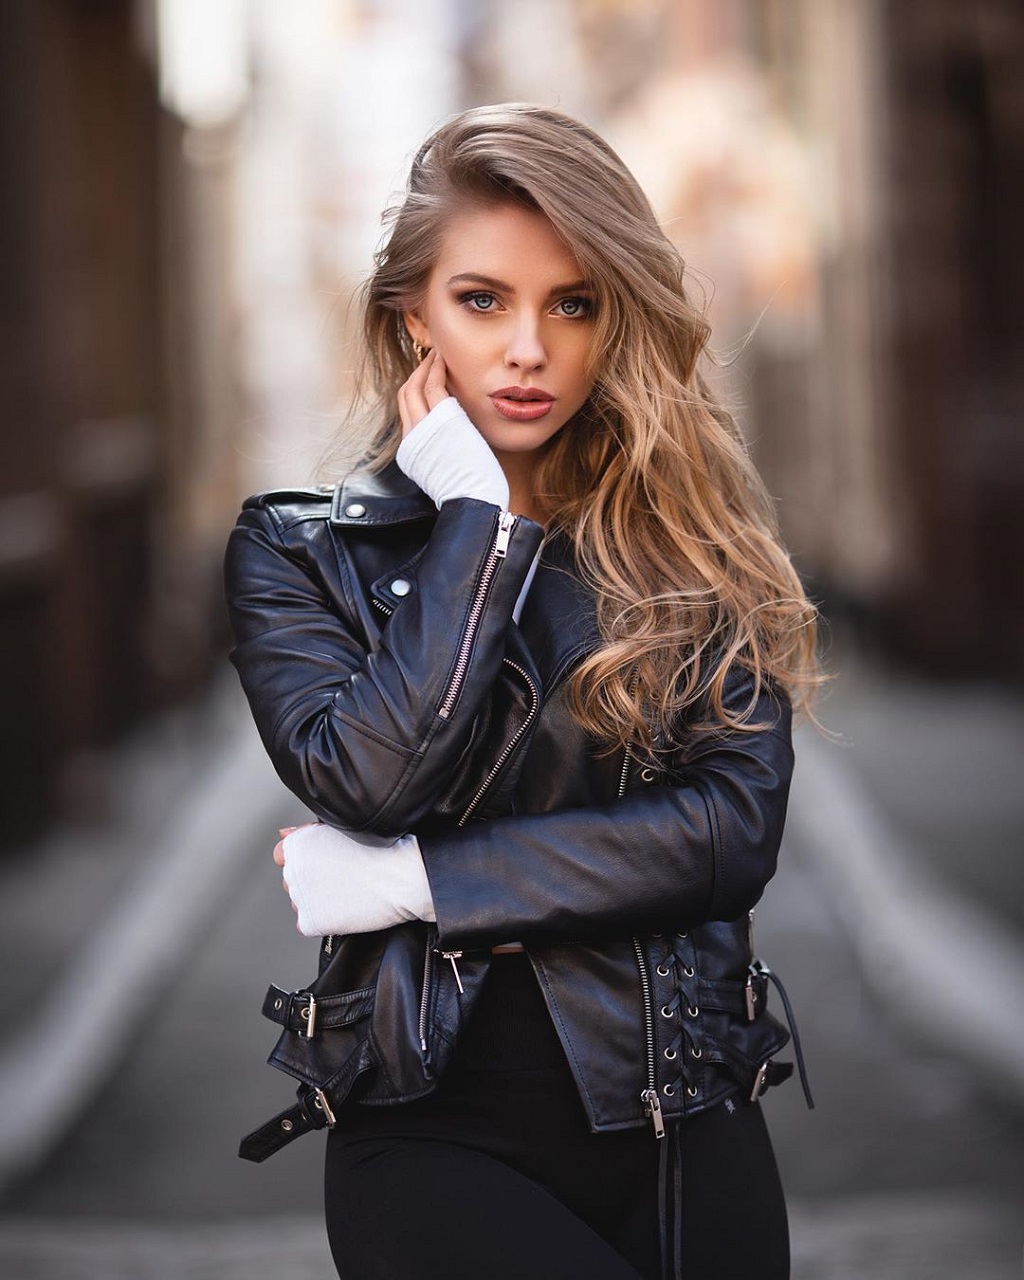 Alexa Breit Women Model Long Hair Blonde Leather Jacket Women Outdoors 1024x1280